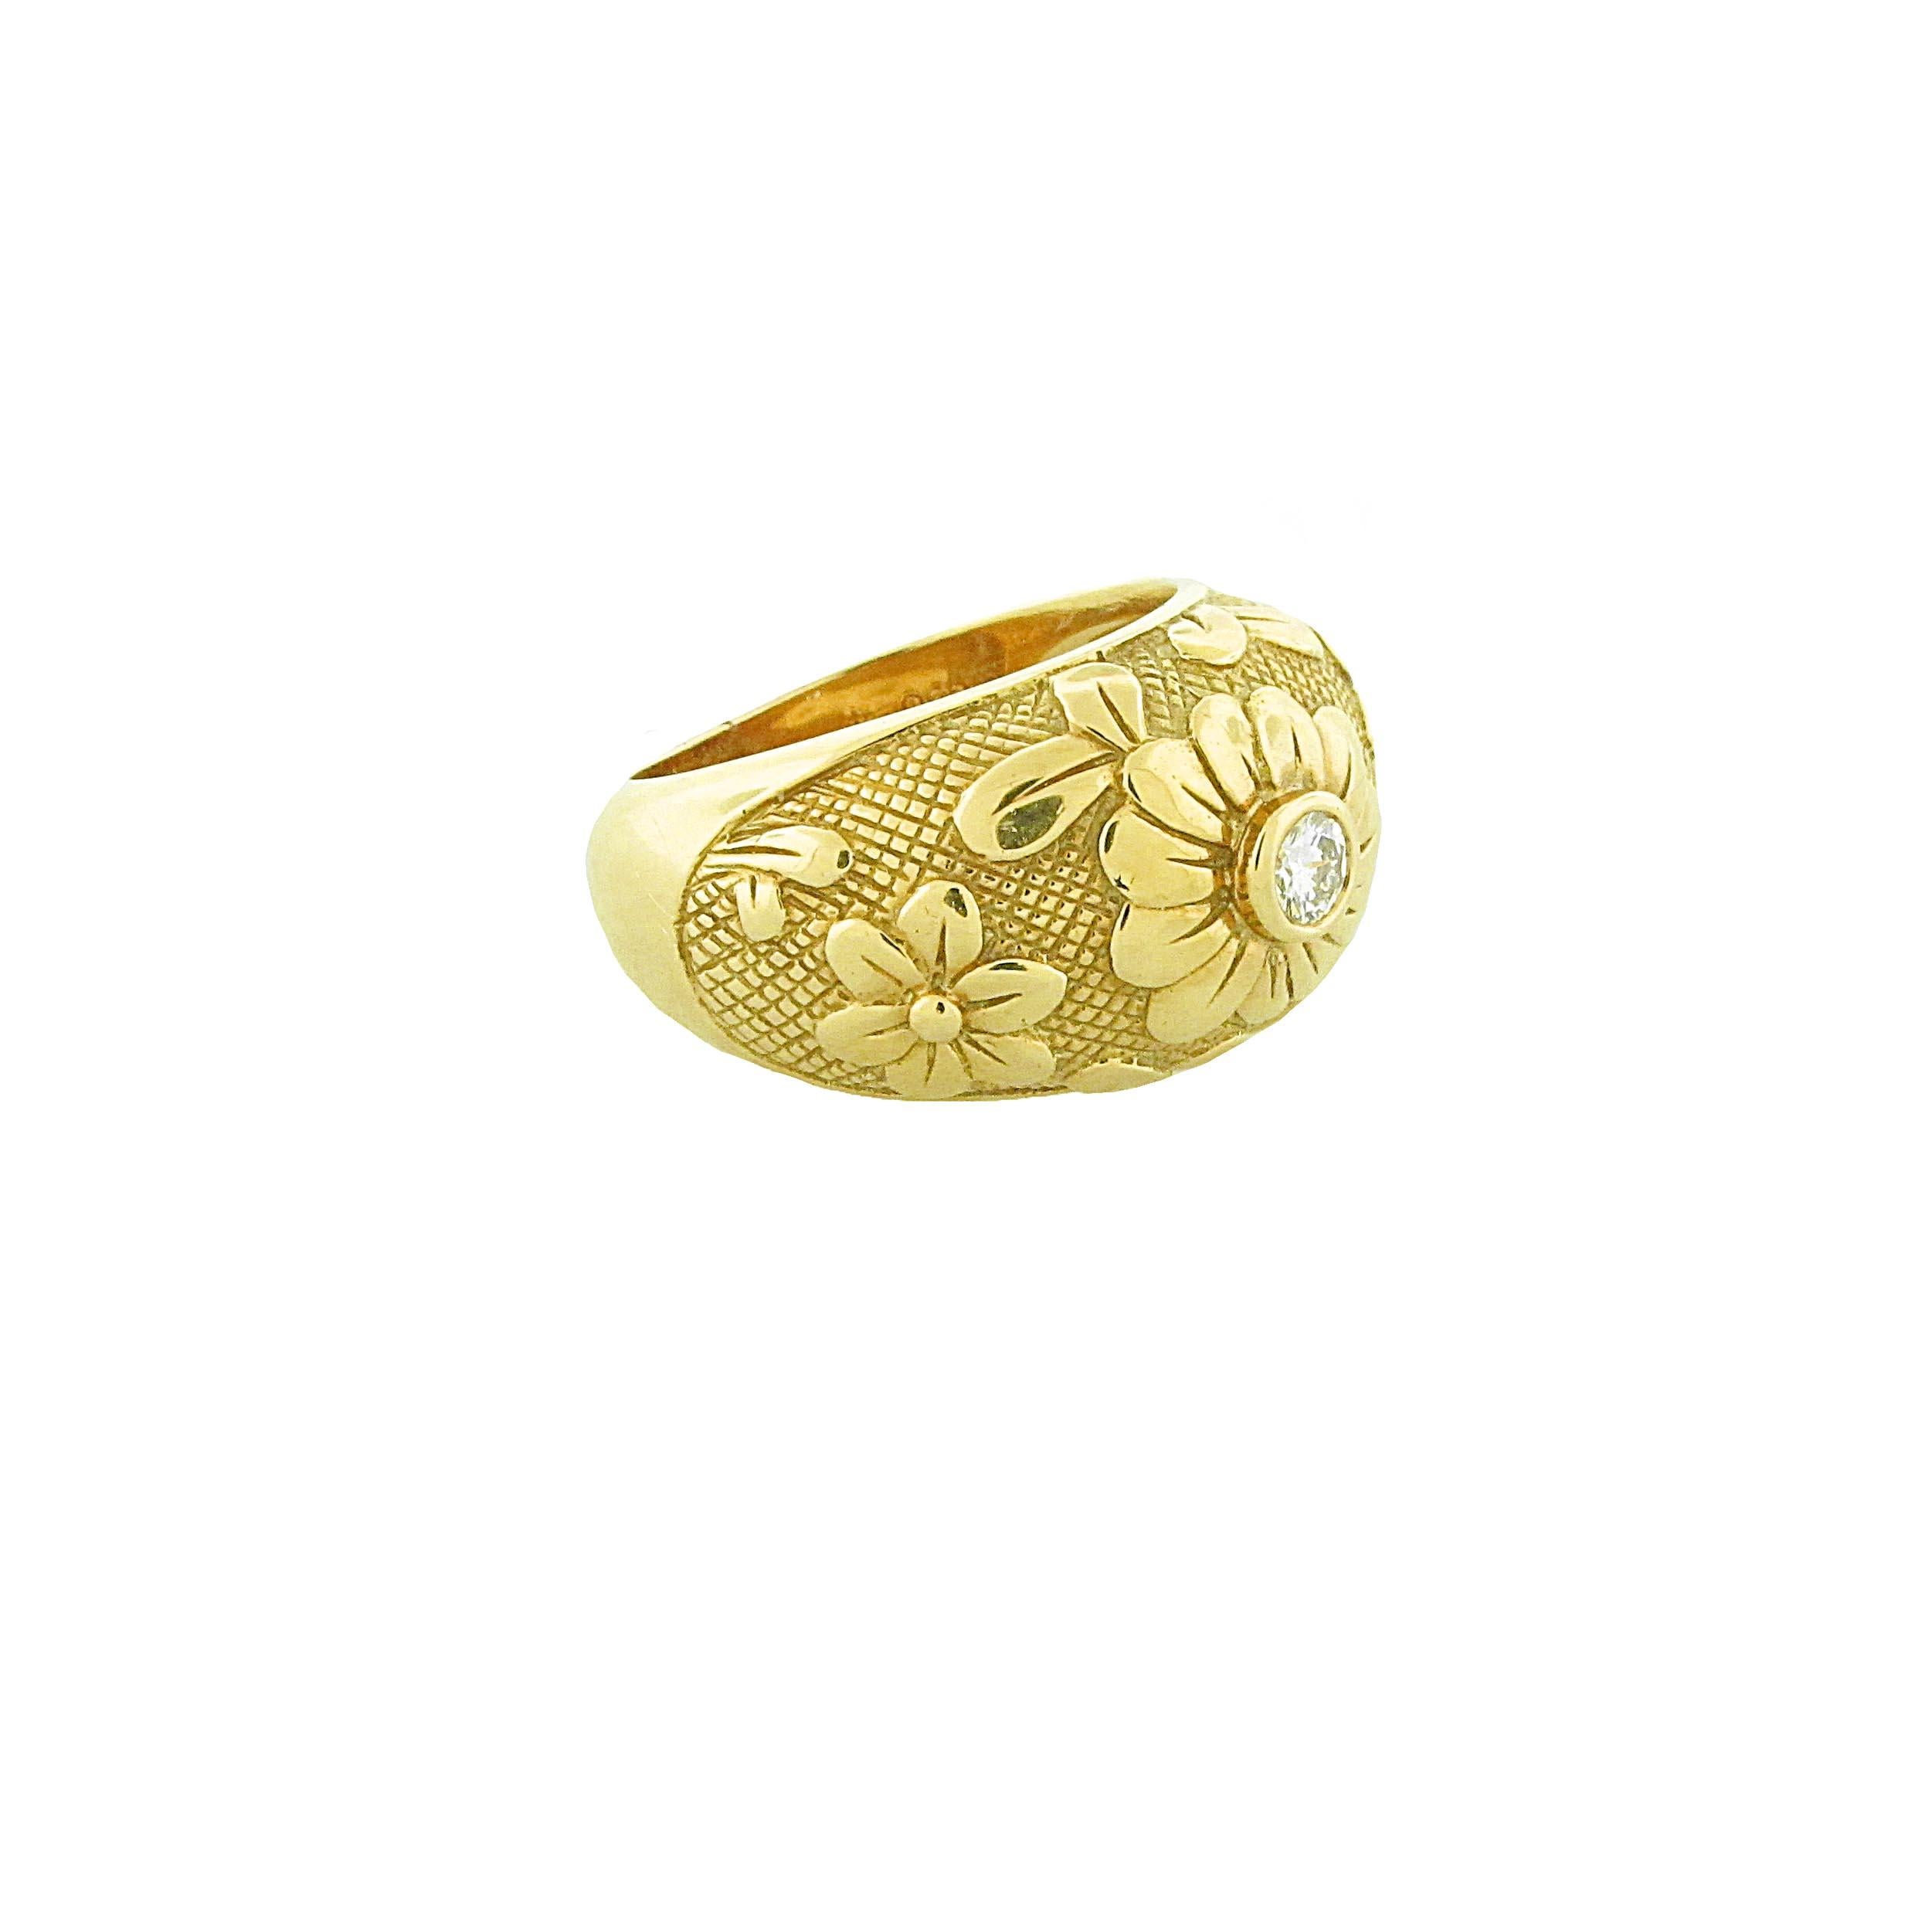 Modern Van Cleef & Arpels, 18 Karat Yellow Gold and Diamond Dome Ring